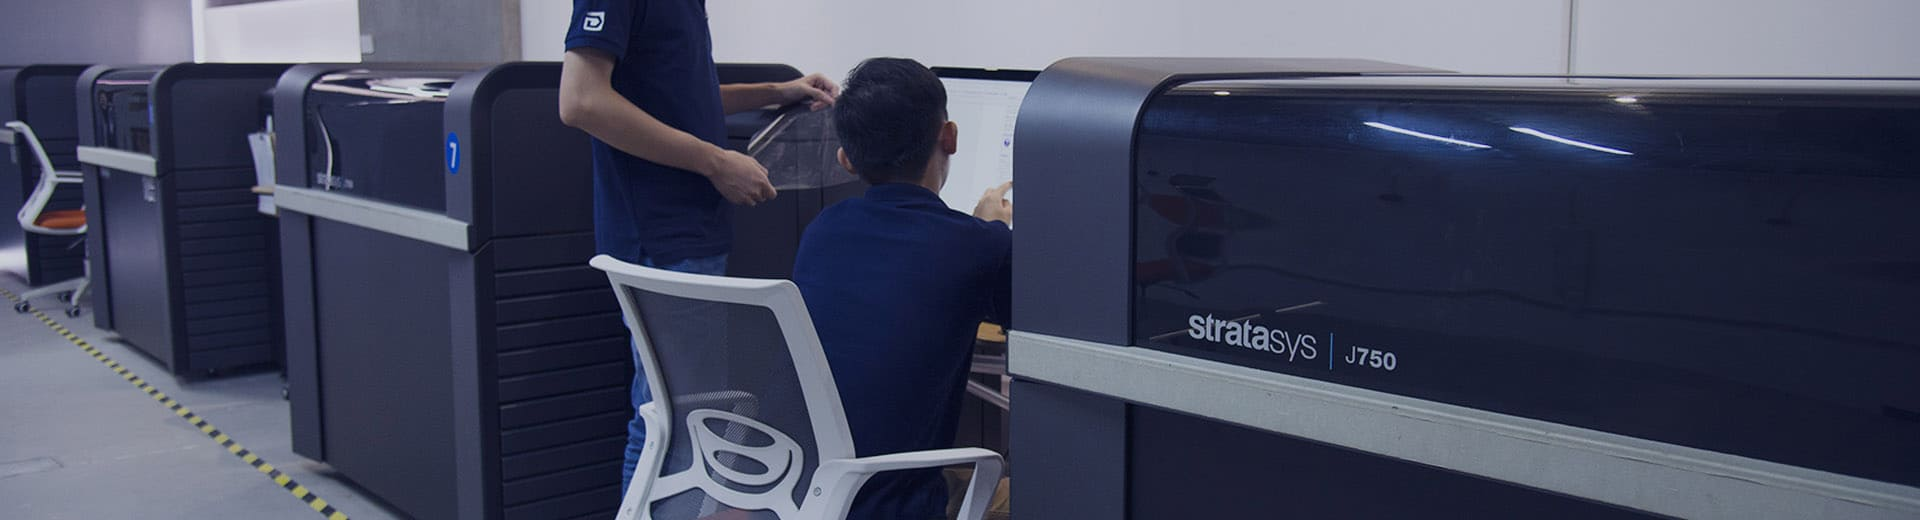 On-Demand 3D Printing Service